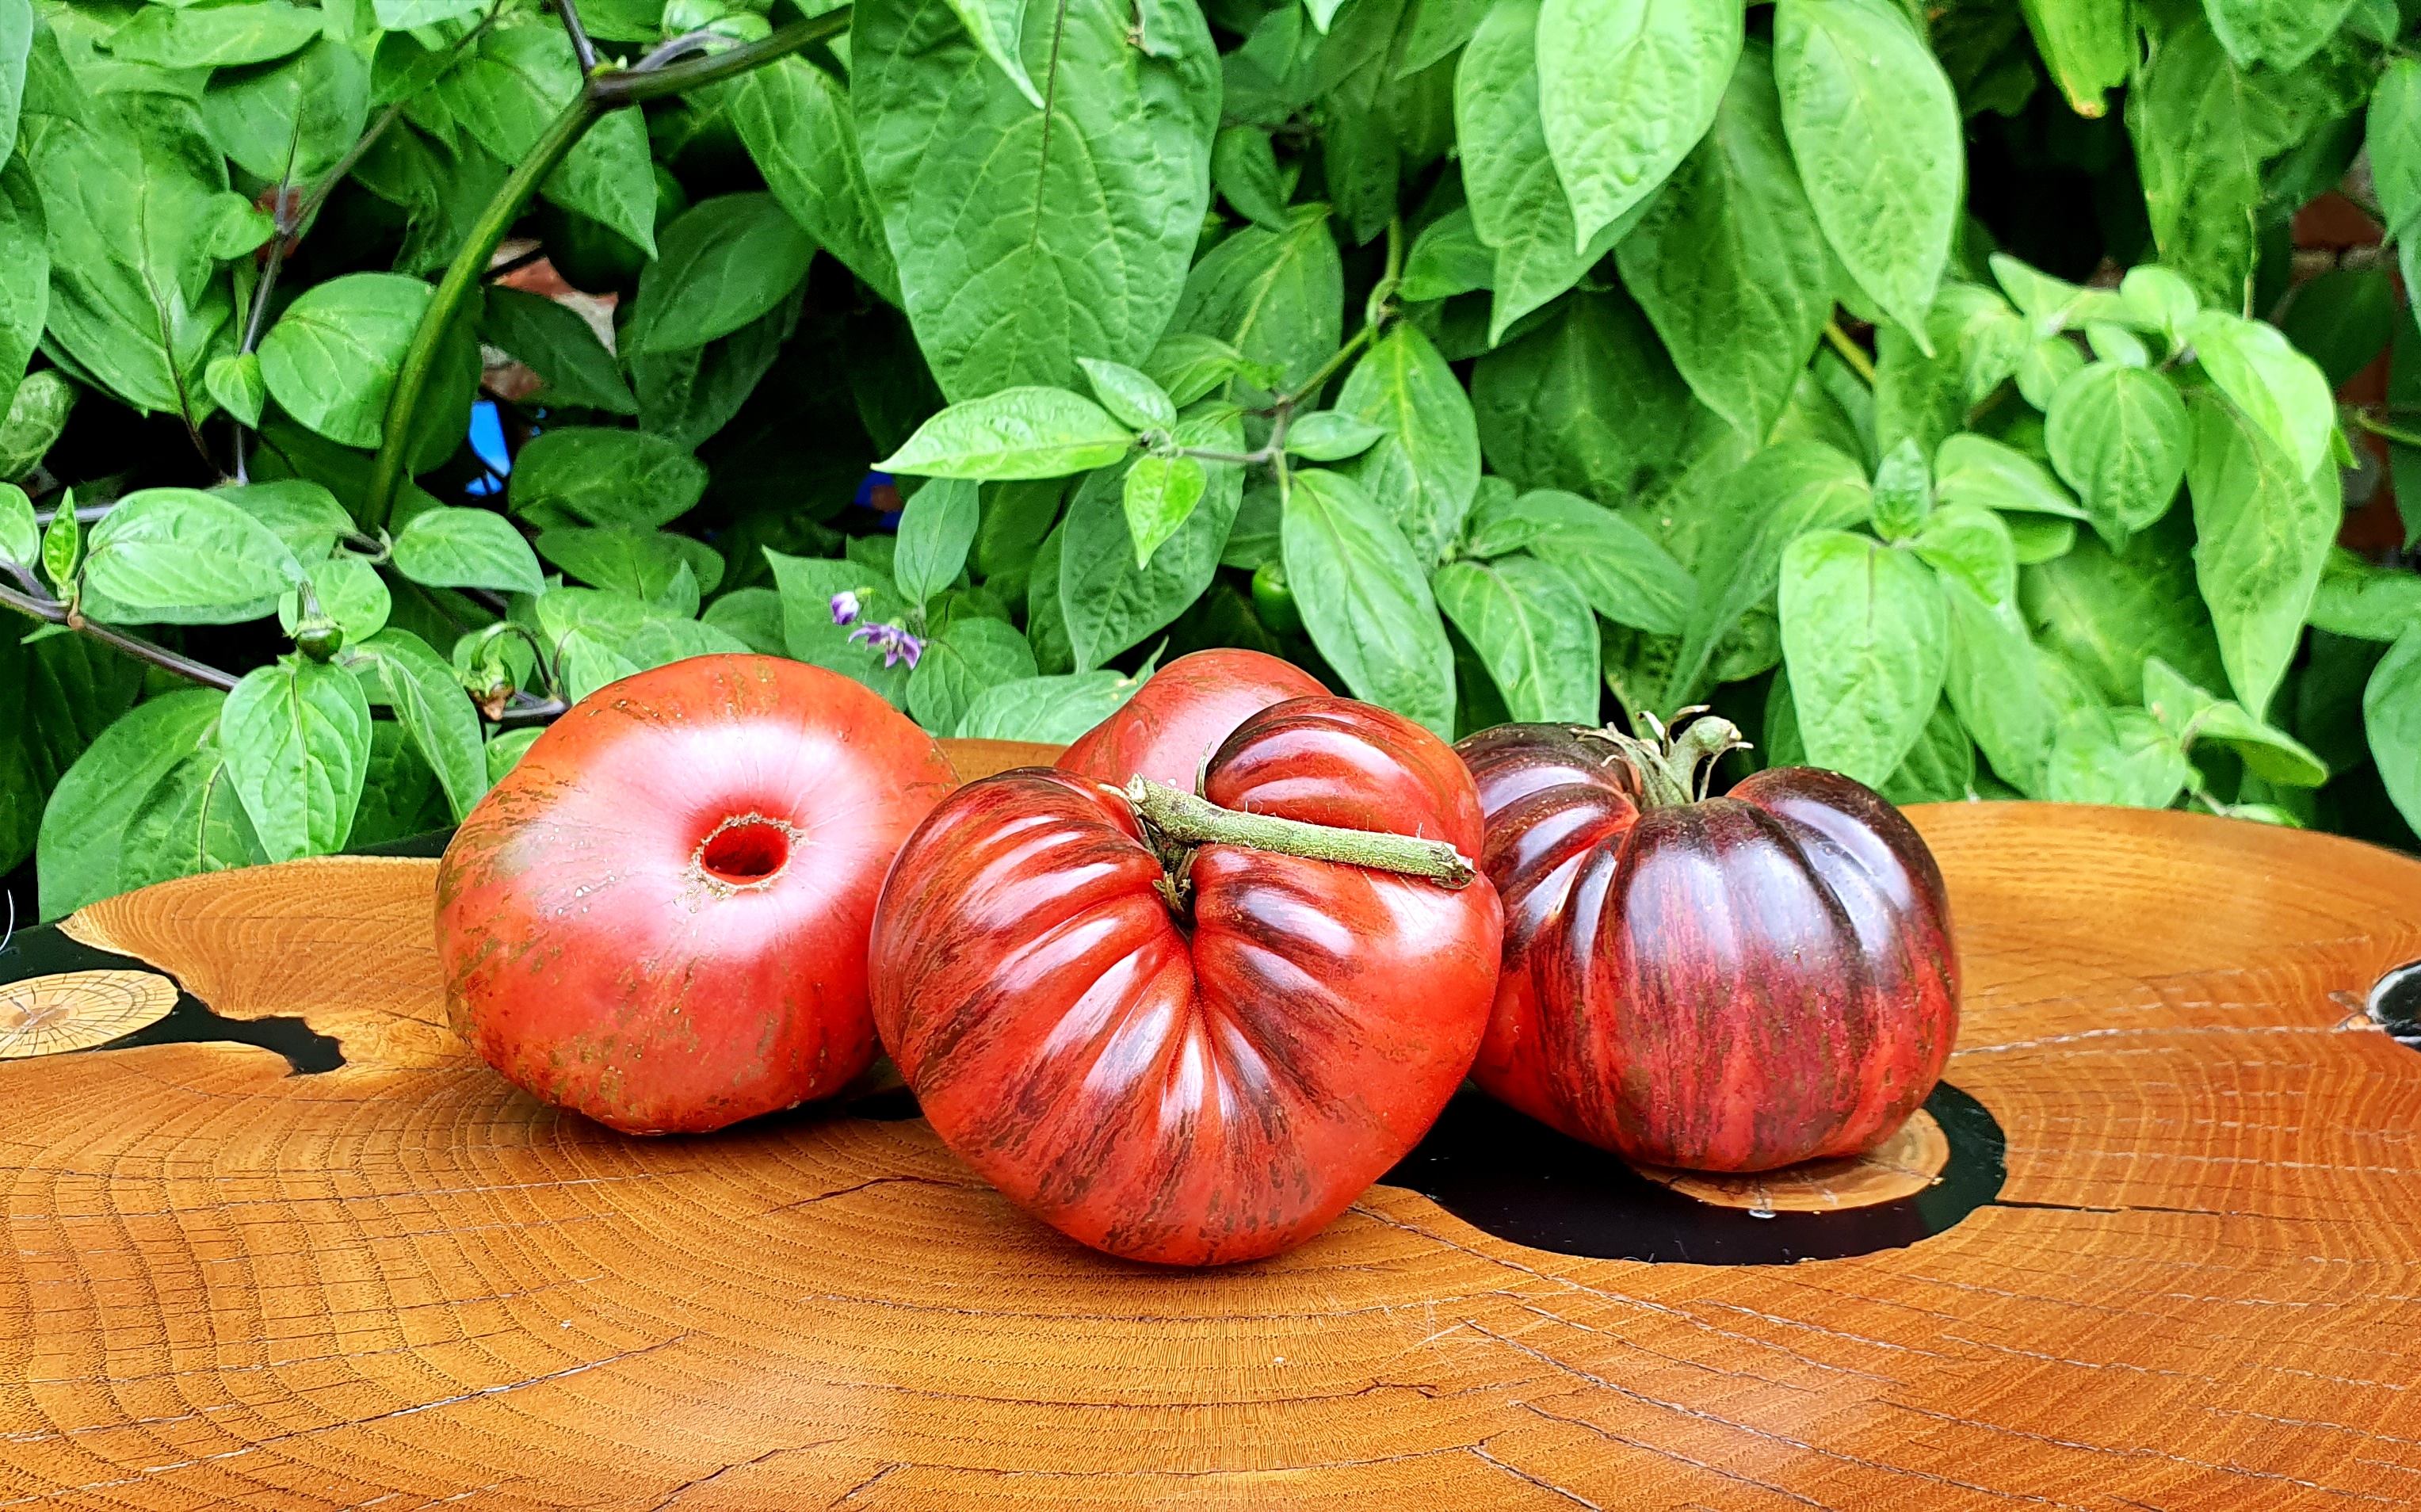 Black and Blue tomatoes: MARSHA'S STARFIGHTER BEEFSTEAK Tomato